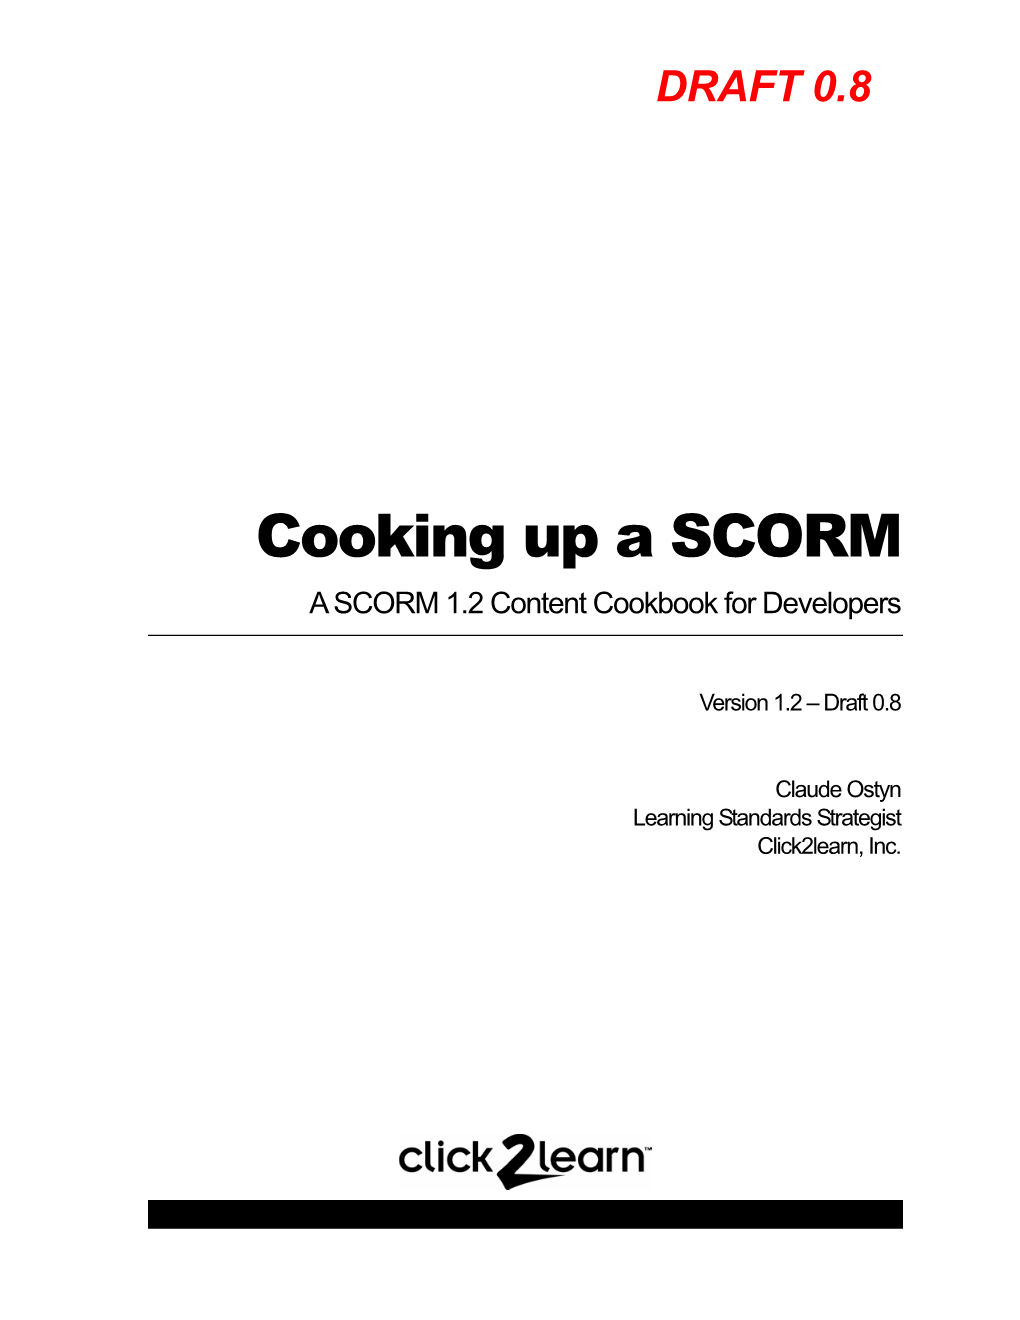 SCORM 1.2 Content Cookbook for Developers